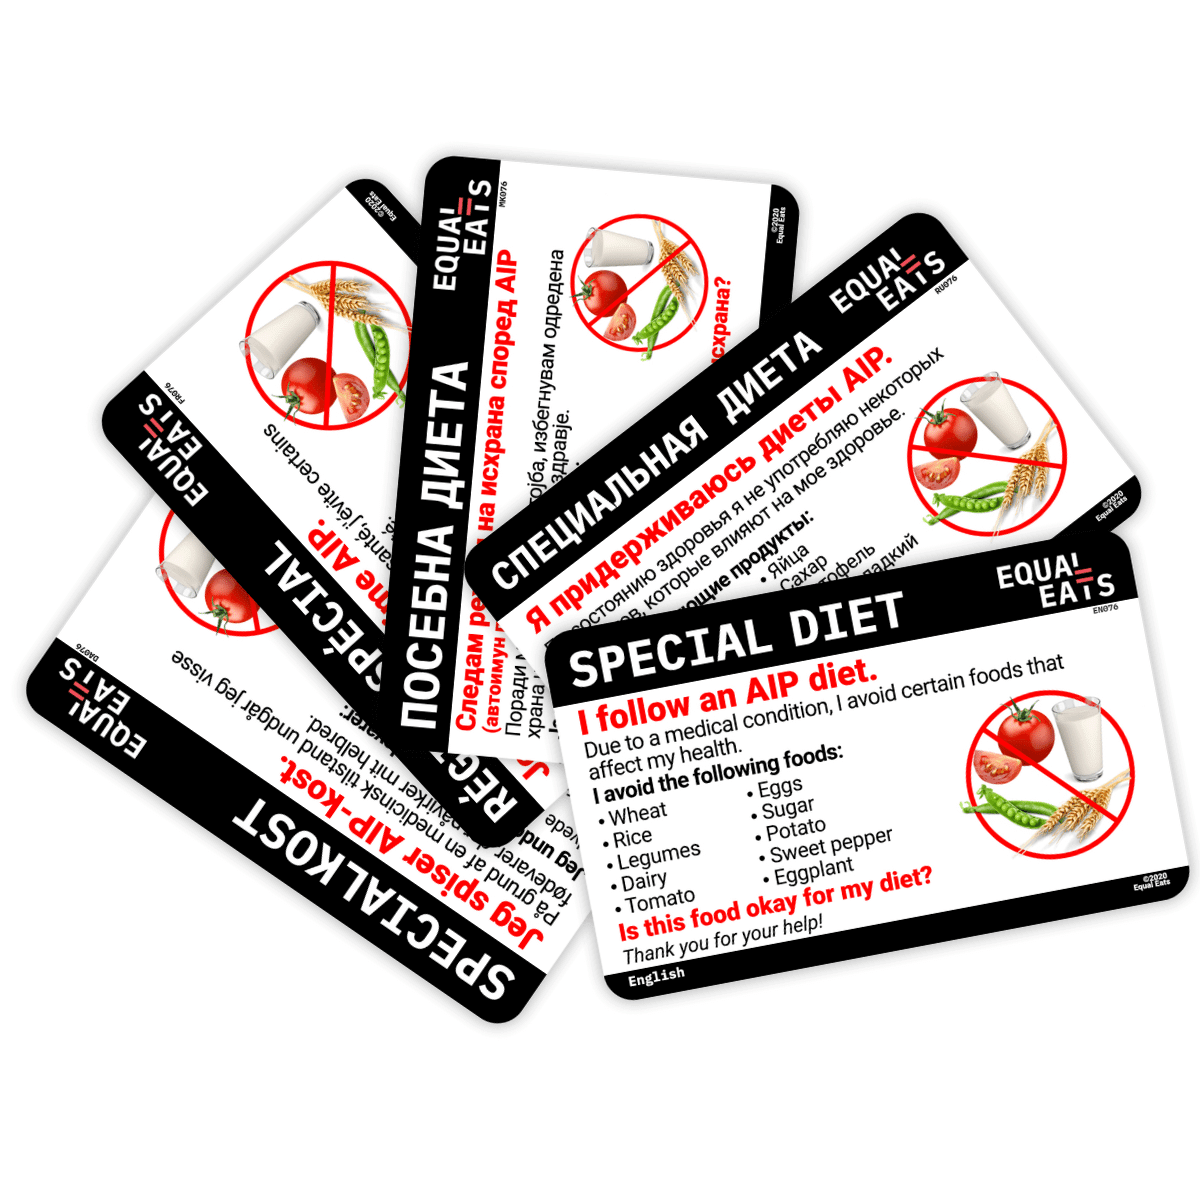 AIP Diet Translation Cards - Equal Eats